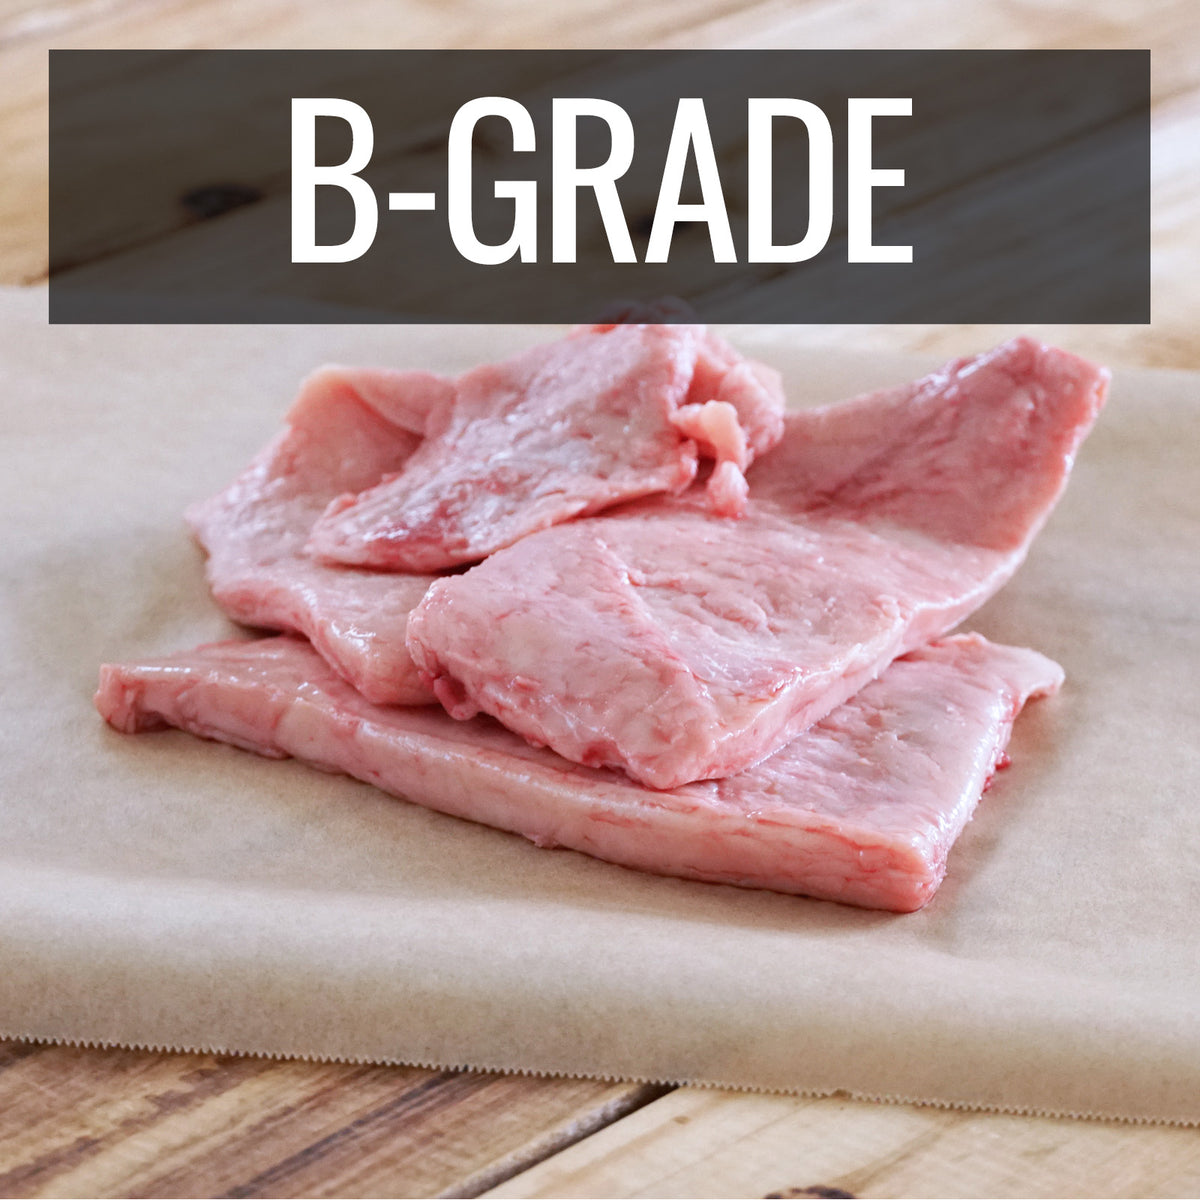 Grain-Fed Beef Fat B-Grade (250g) - Horizon Farms